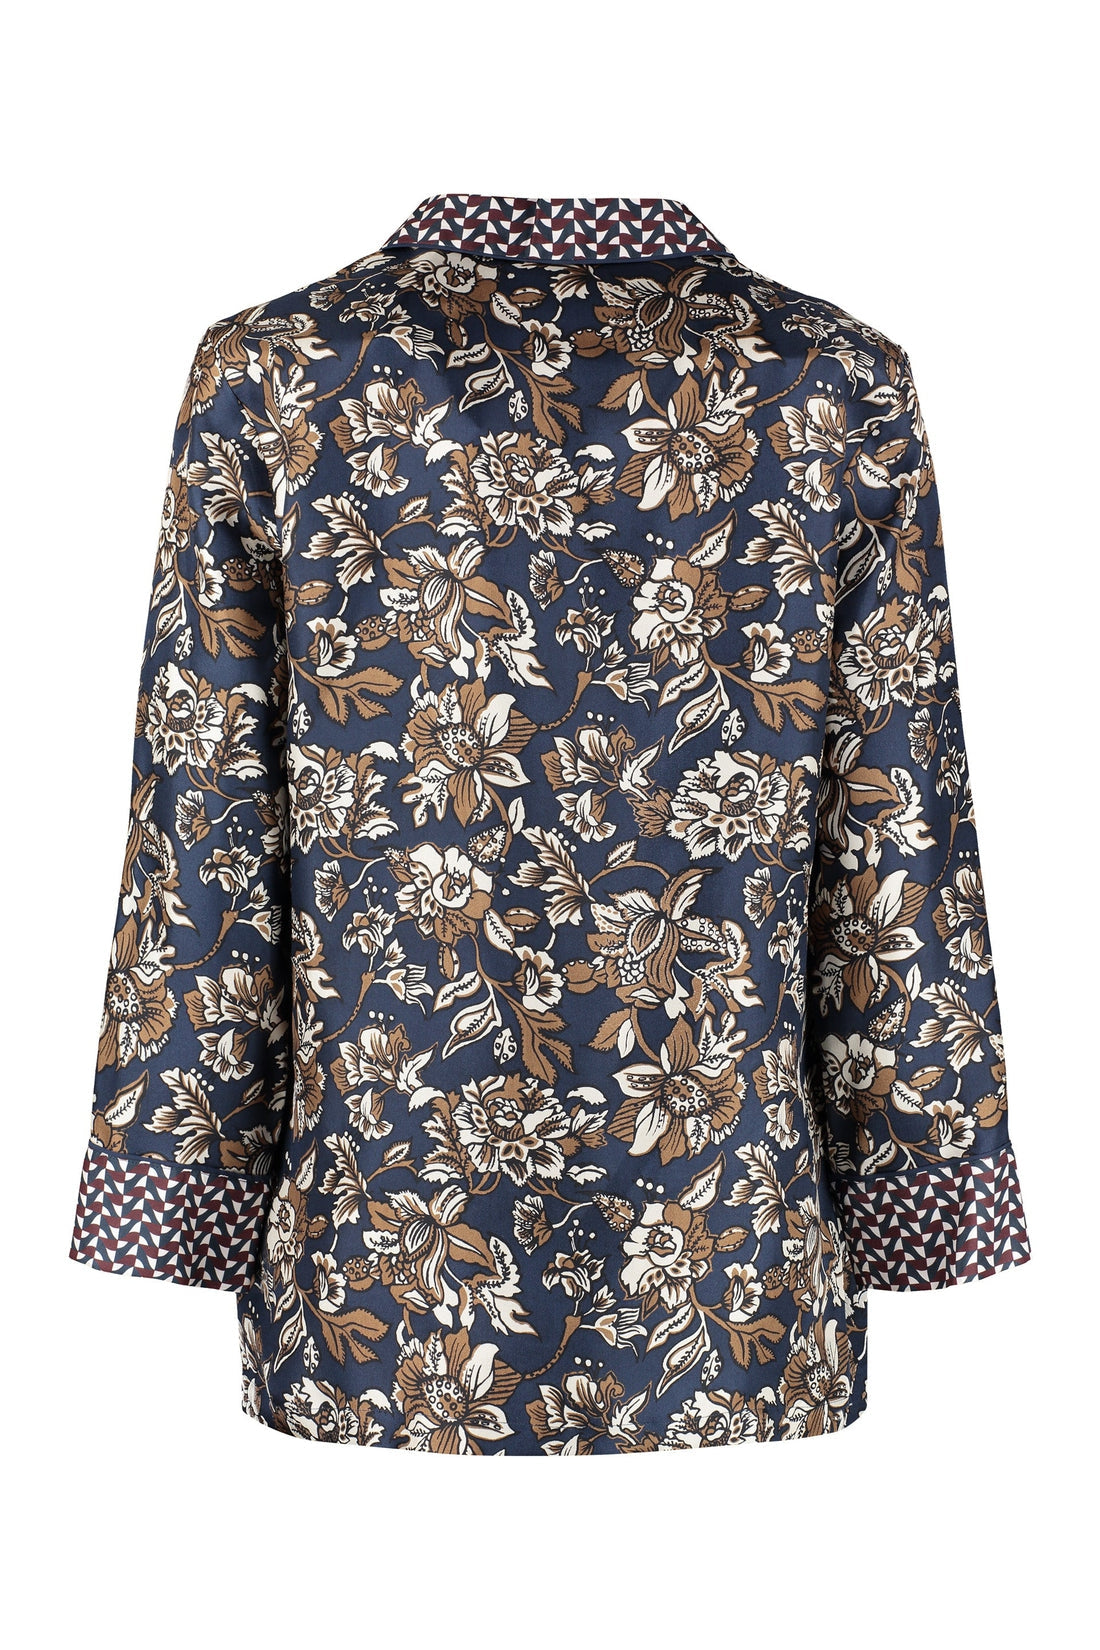 S MAX MARA-OUTLET-SALE-Mogol printed silk pajama blouse-ARCHIVIST